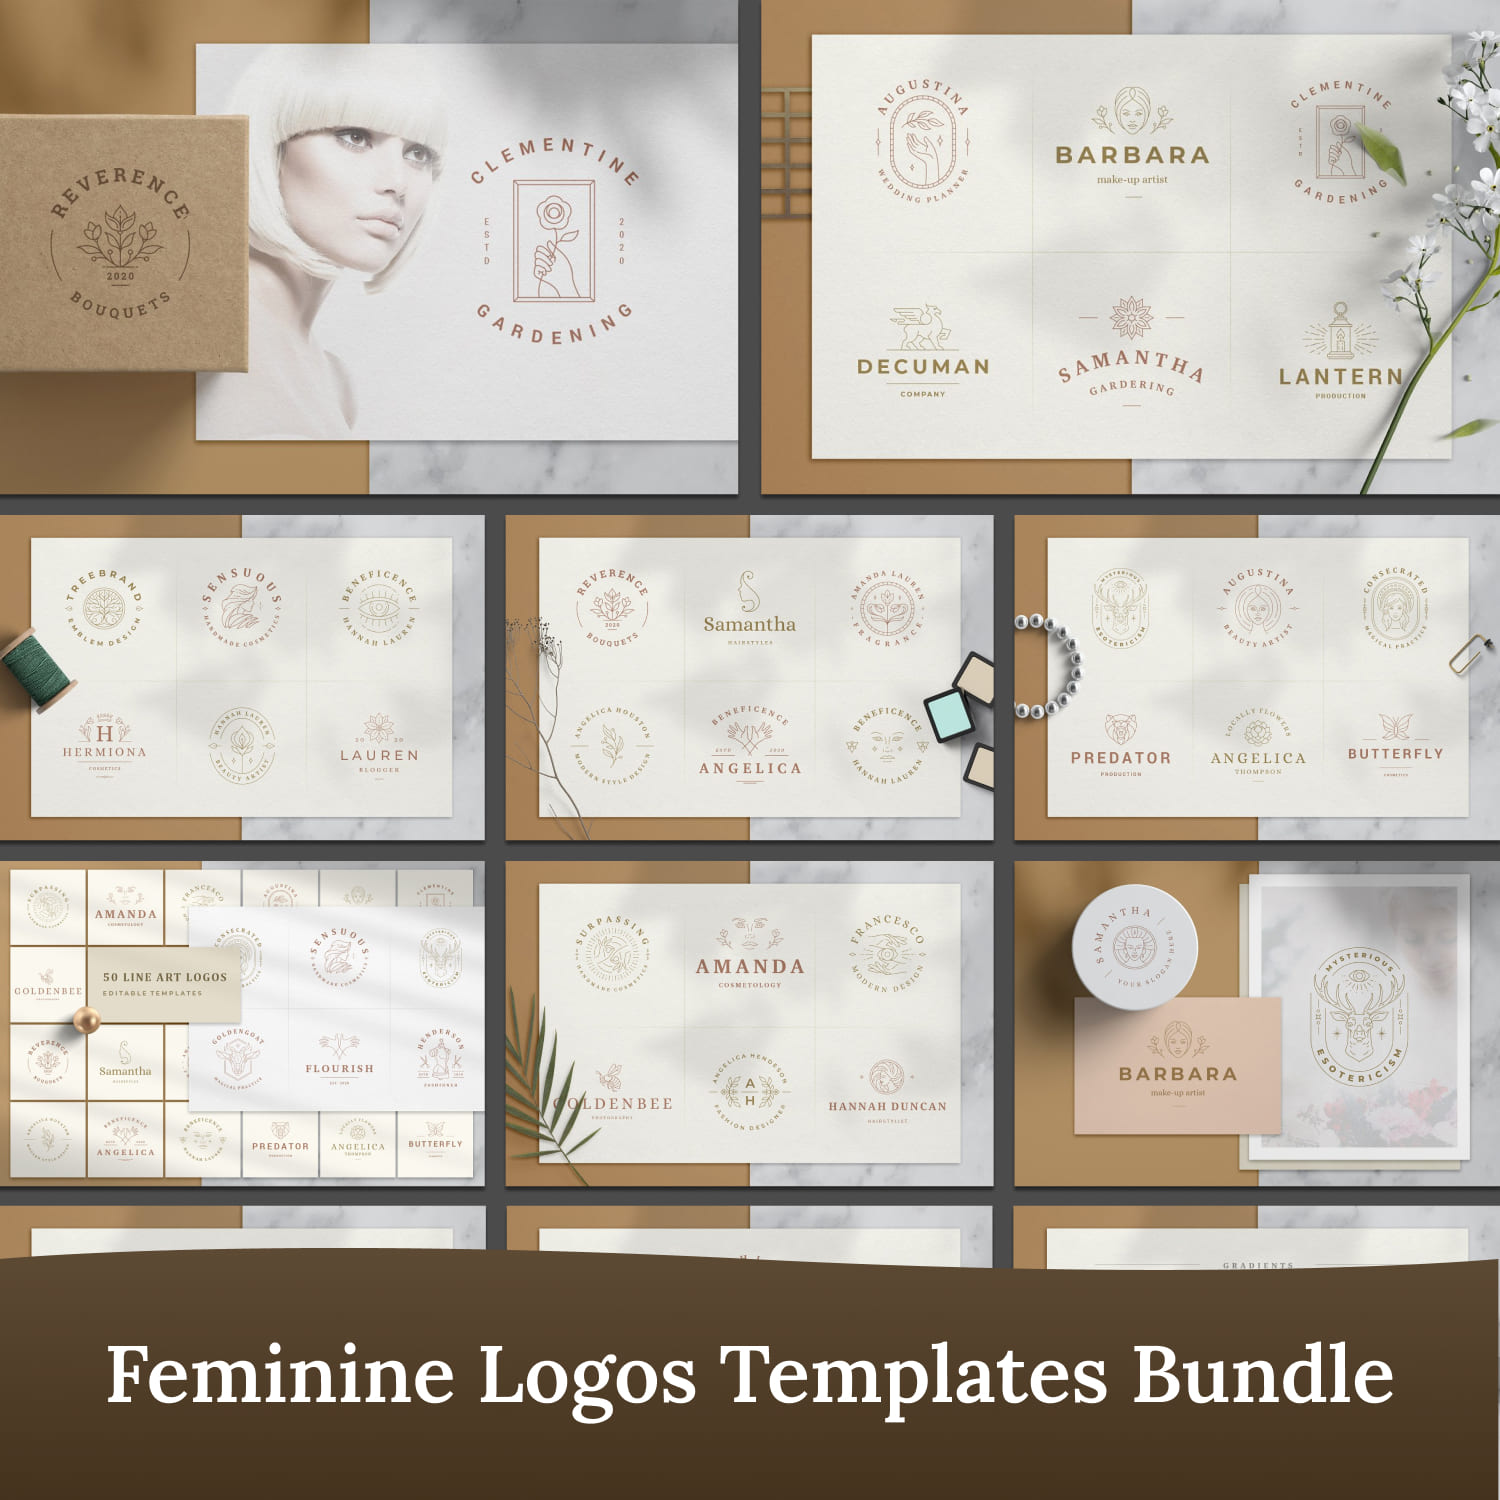 Feminine Logos Editable Templates Bundle cover image.